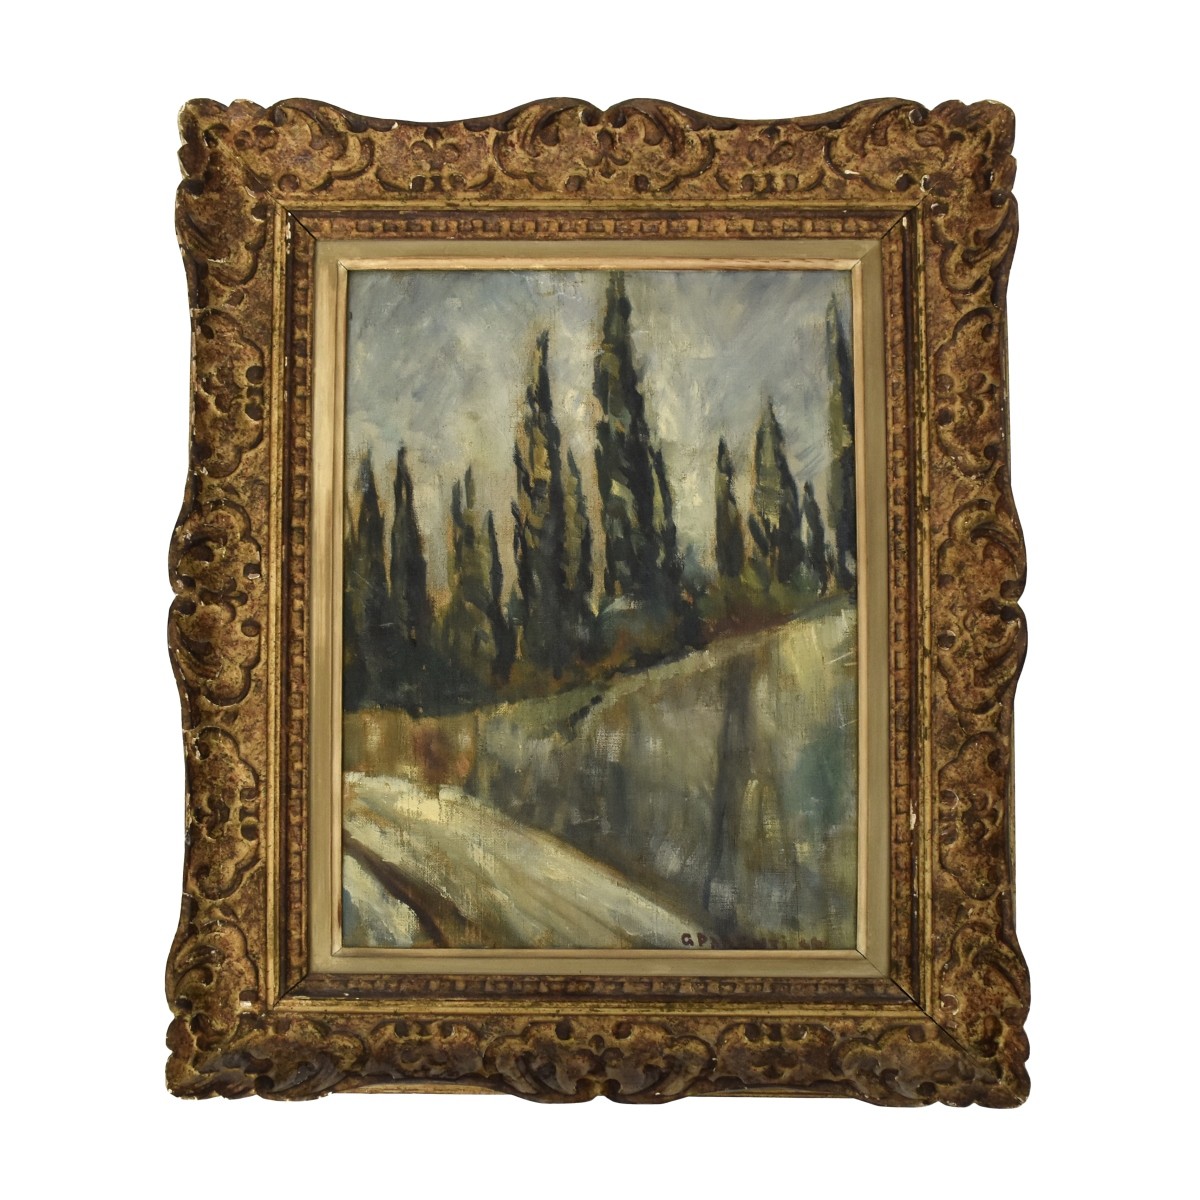 Antique Oil on Canvas of a Landscape